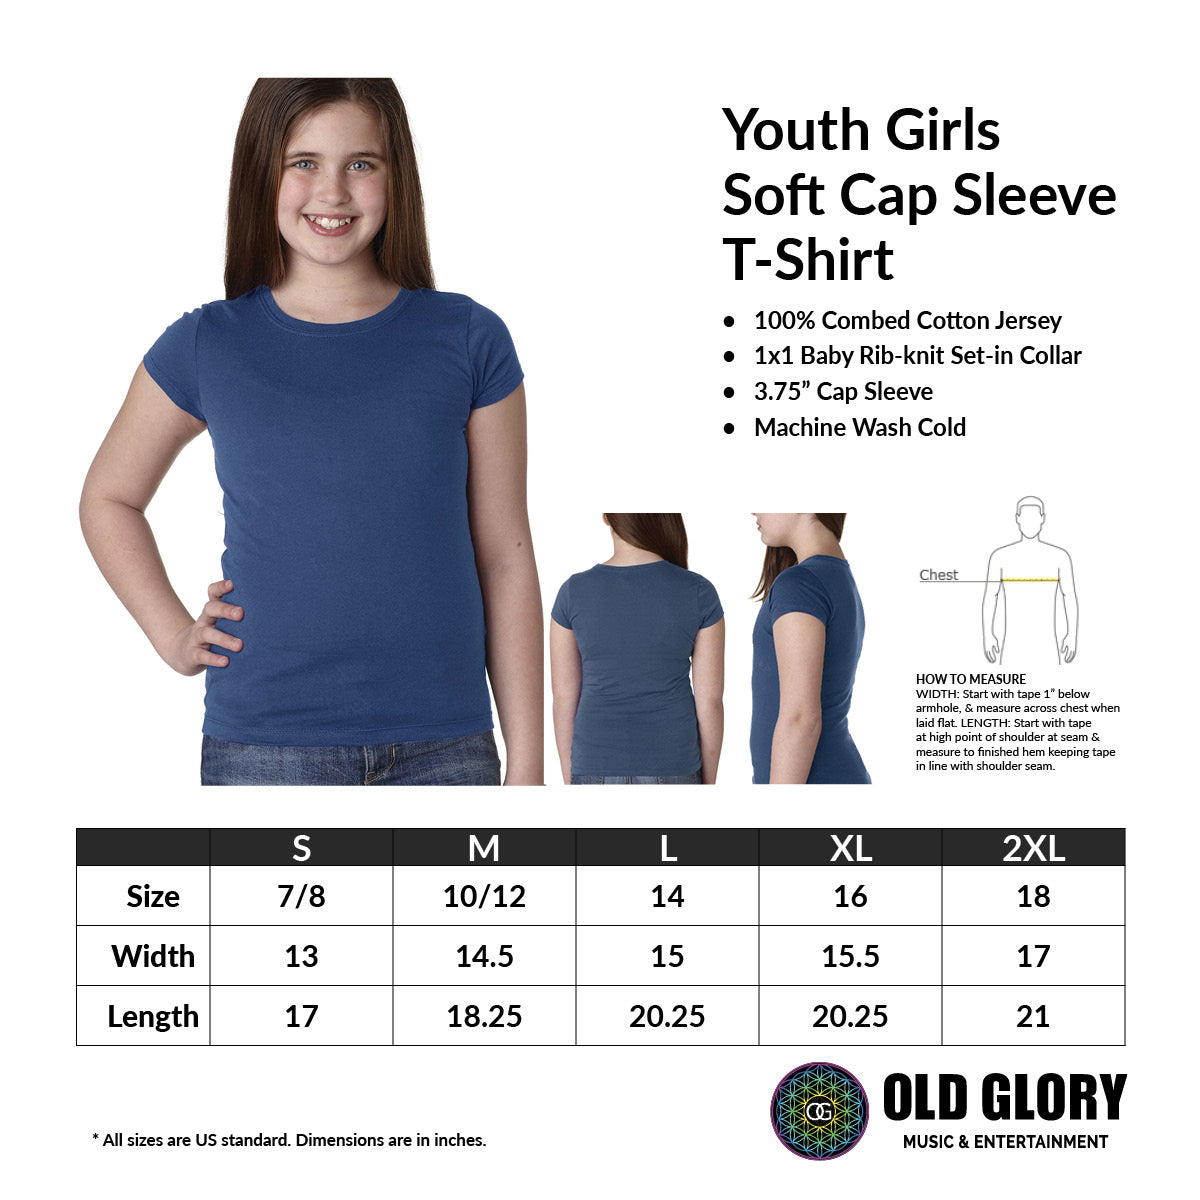 Touch Chicago Cubs Ladies Grey Alumni Bullseye V-Neck T-Shirt Medium